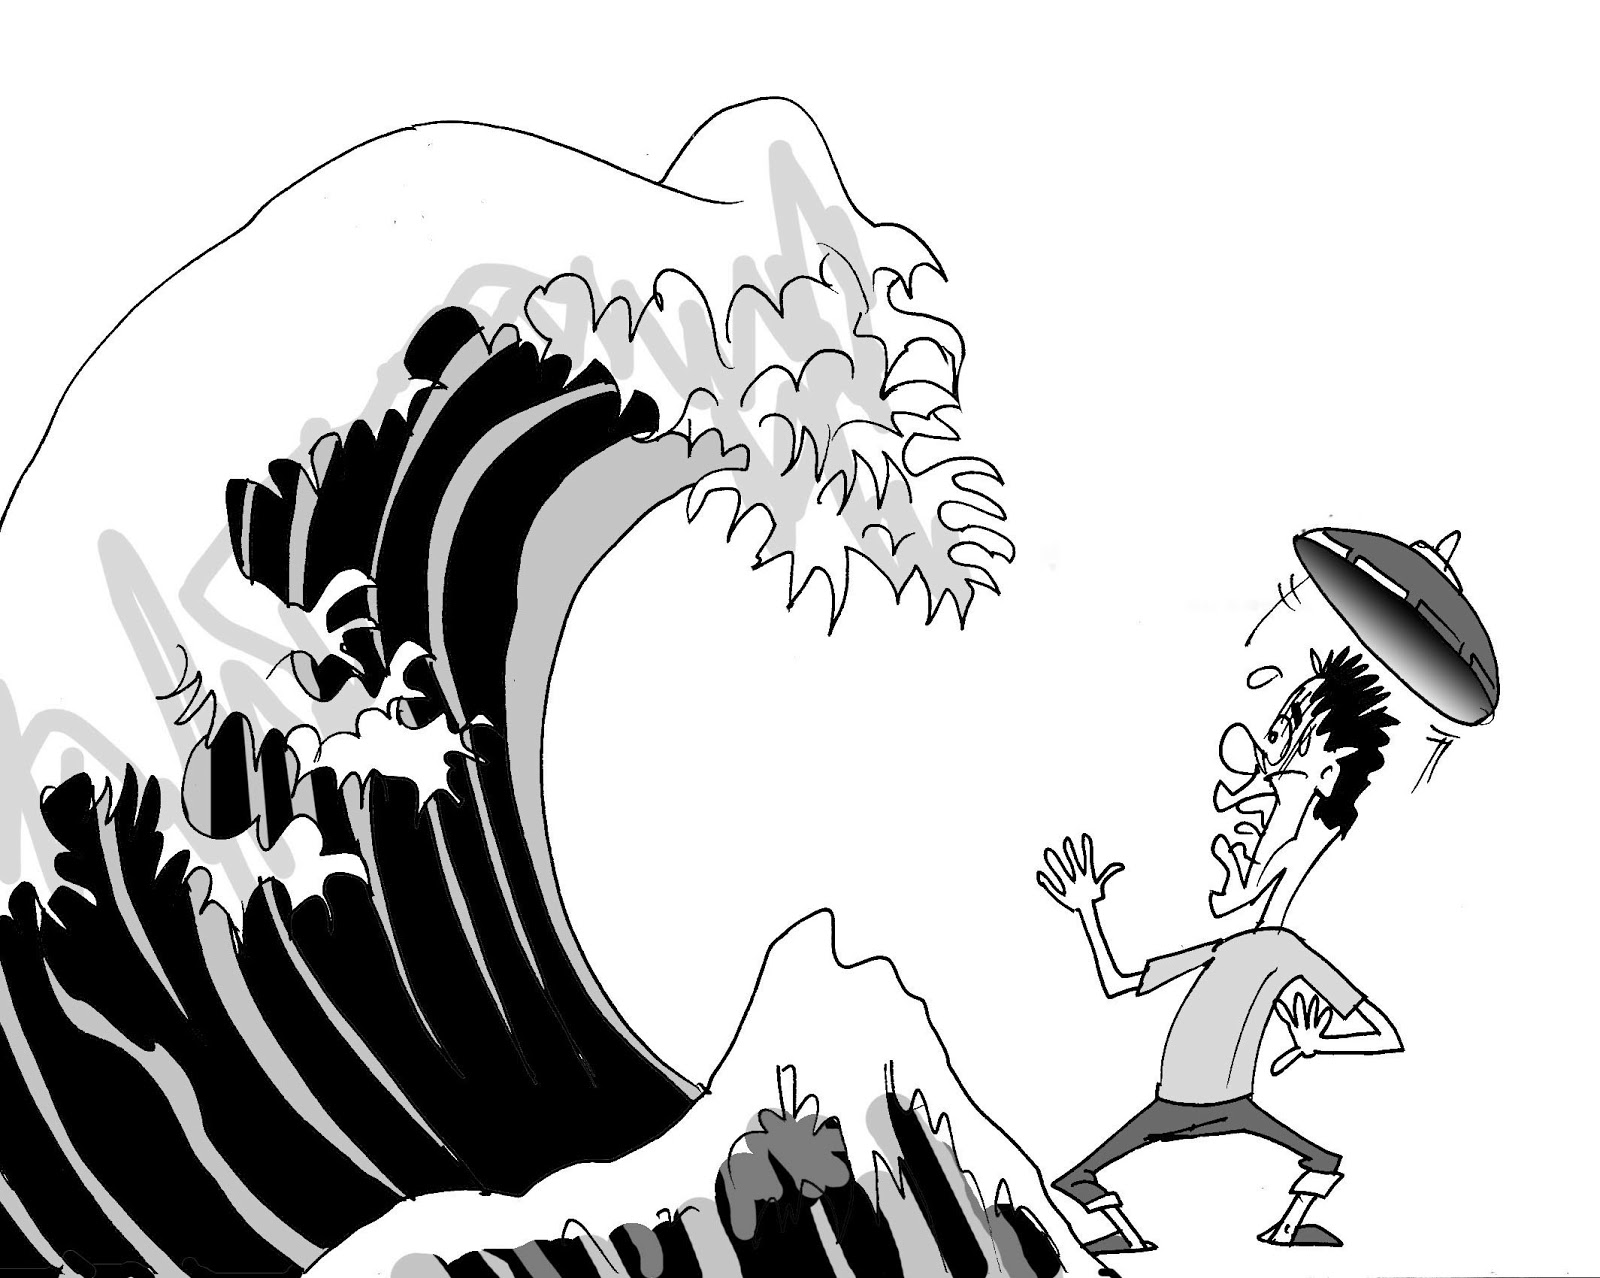 my cartoons and comicstrip: tsunami editorial cartoon by bladimer usi